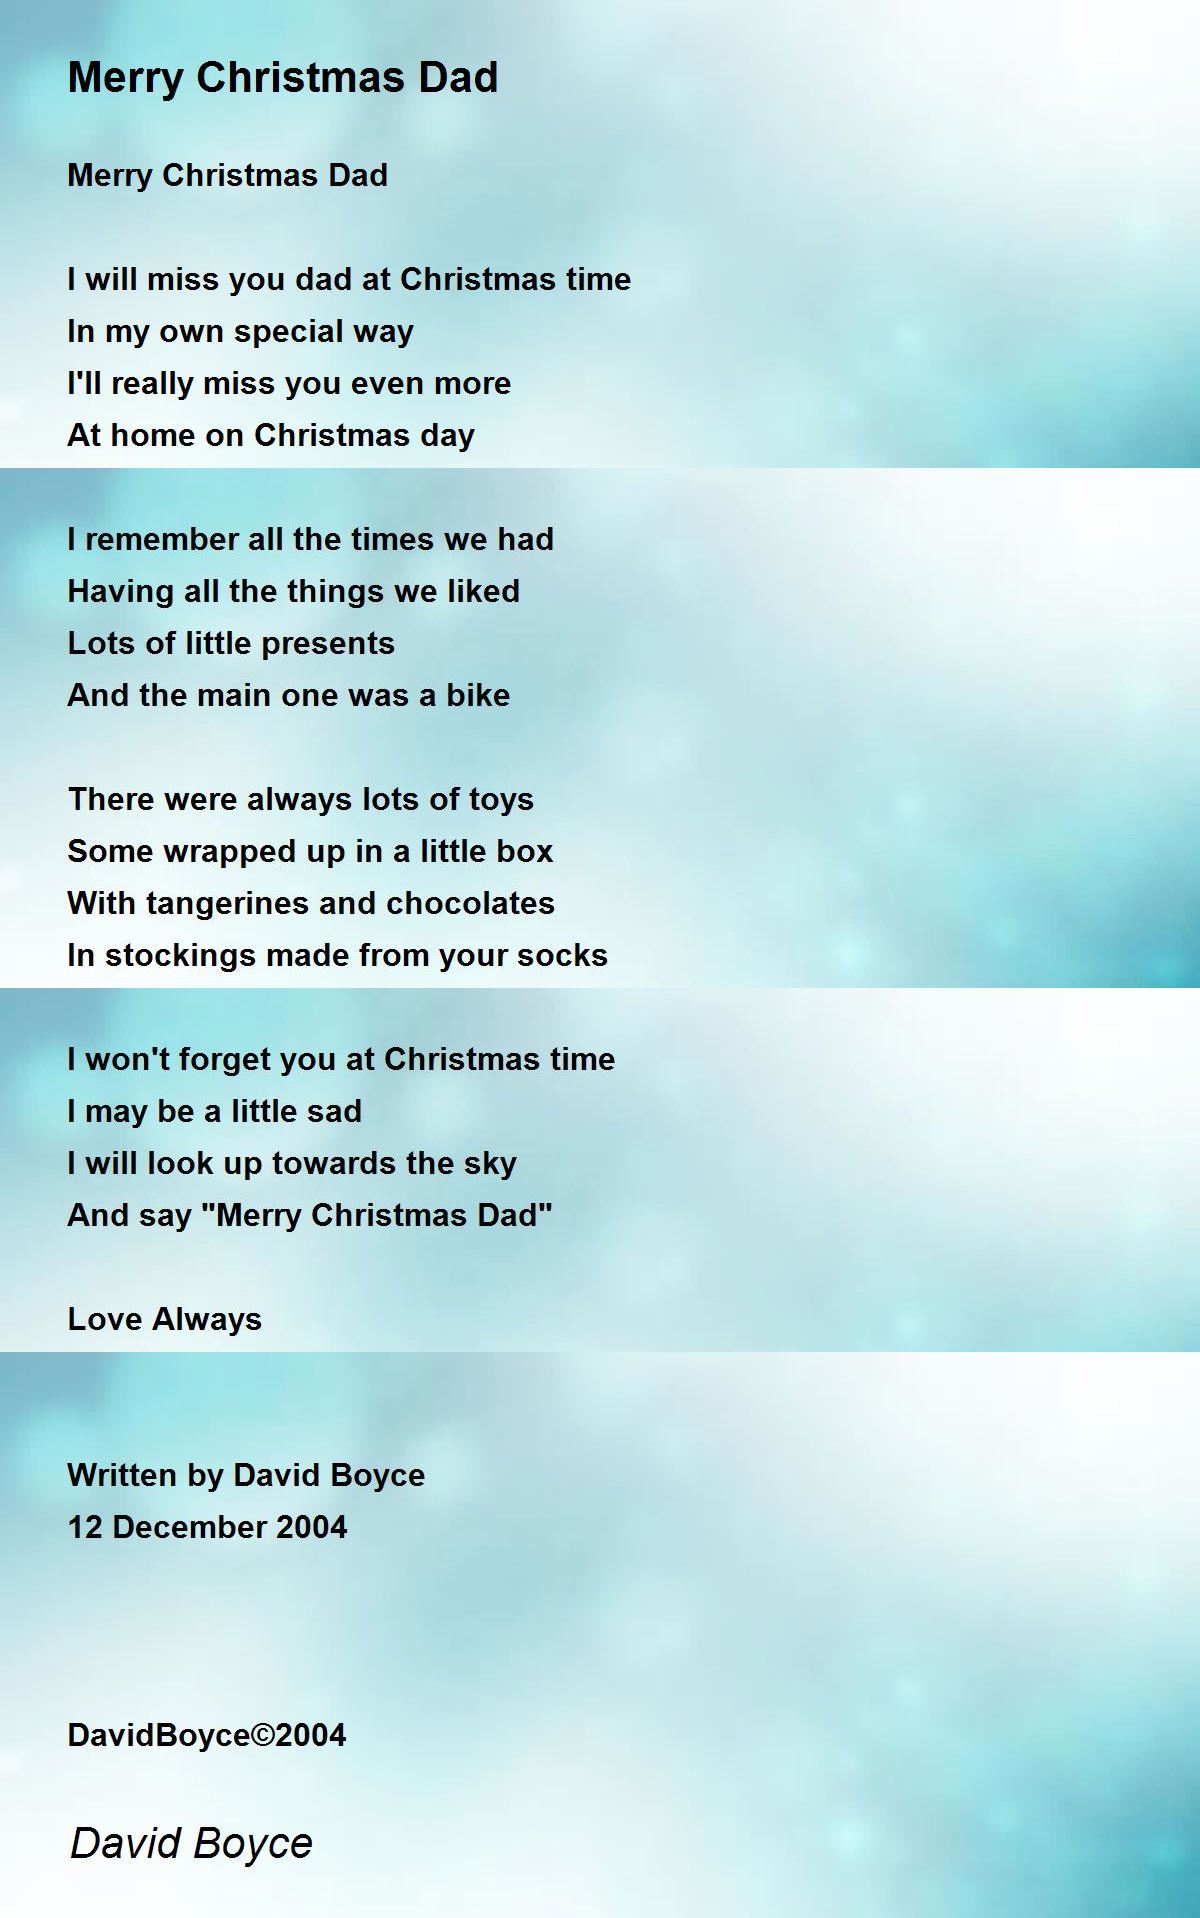 Merry Christmas Dad - Merry Christmas Dad Poem by David Boyce